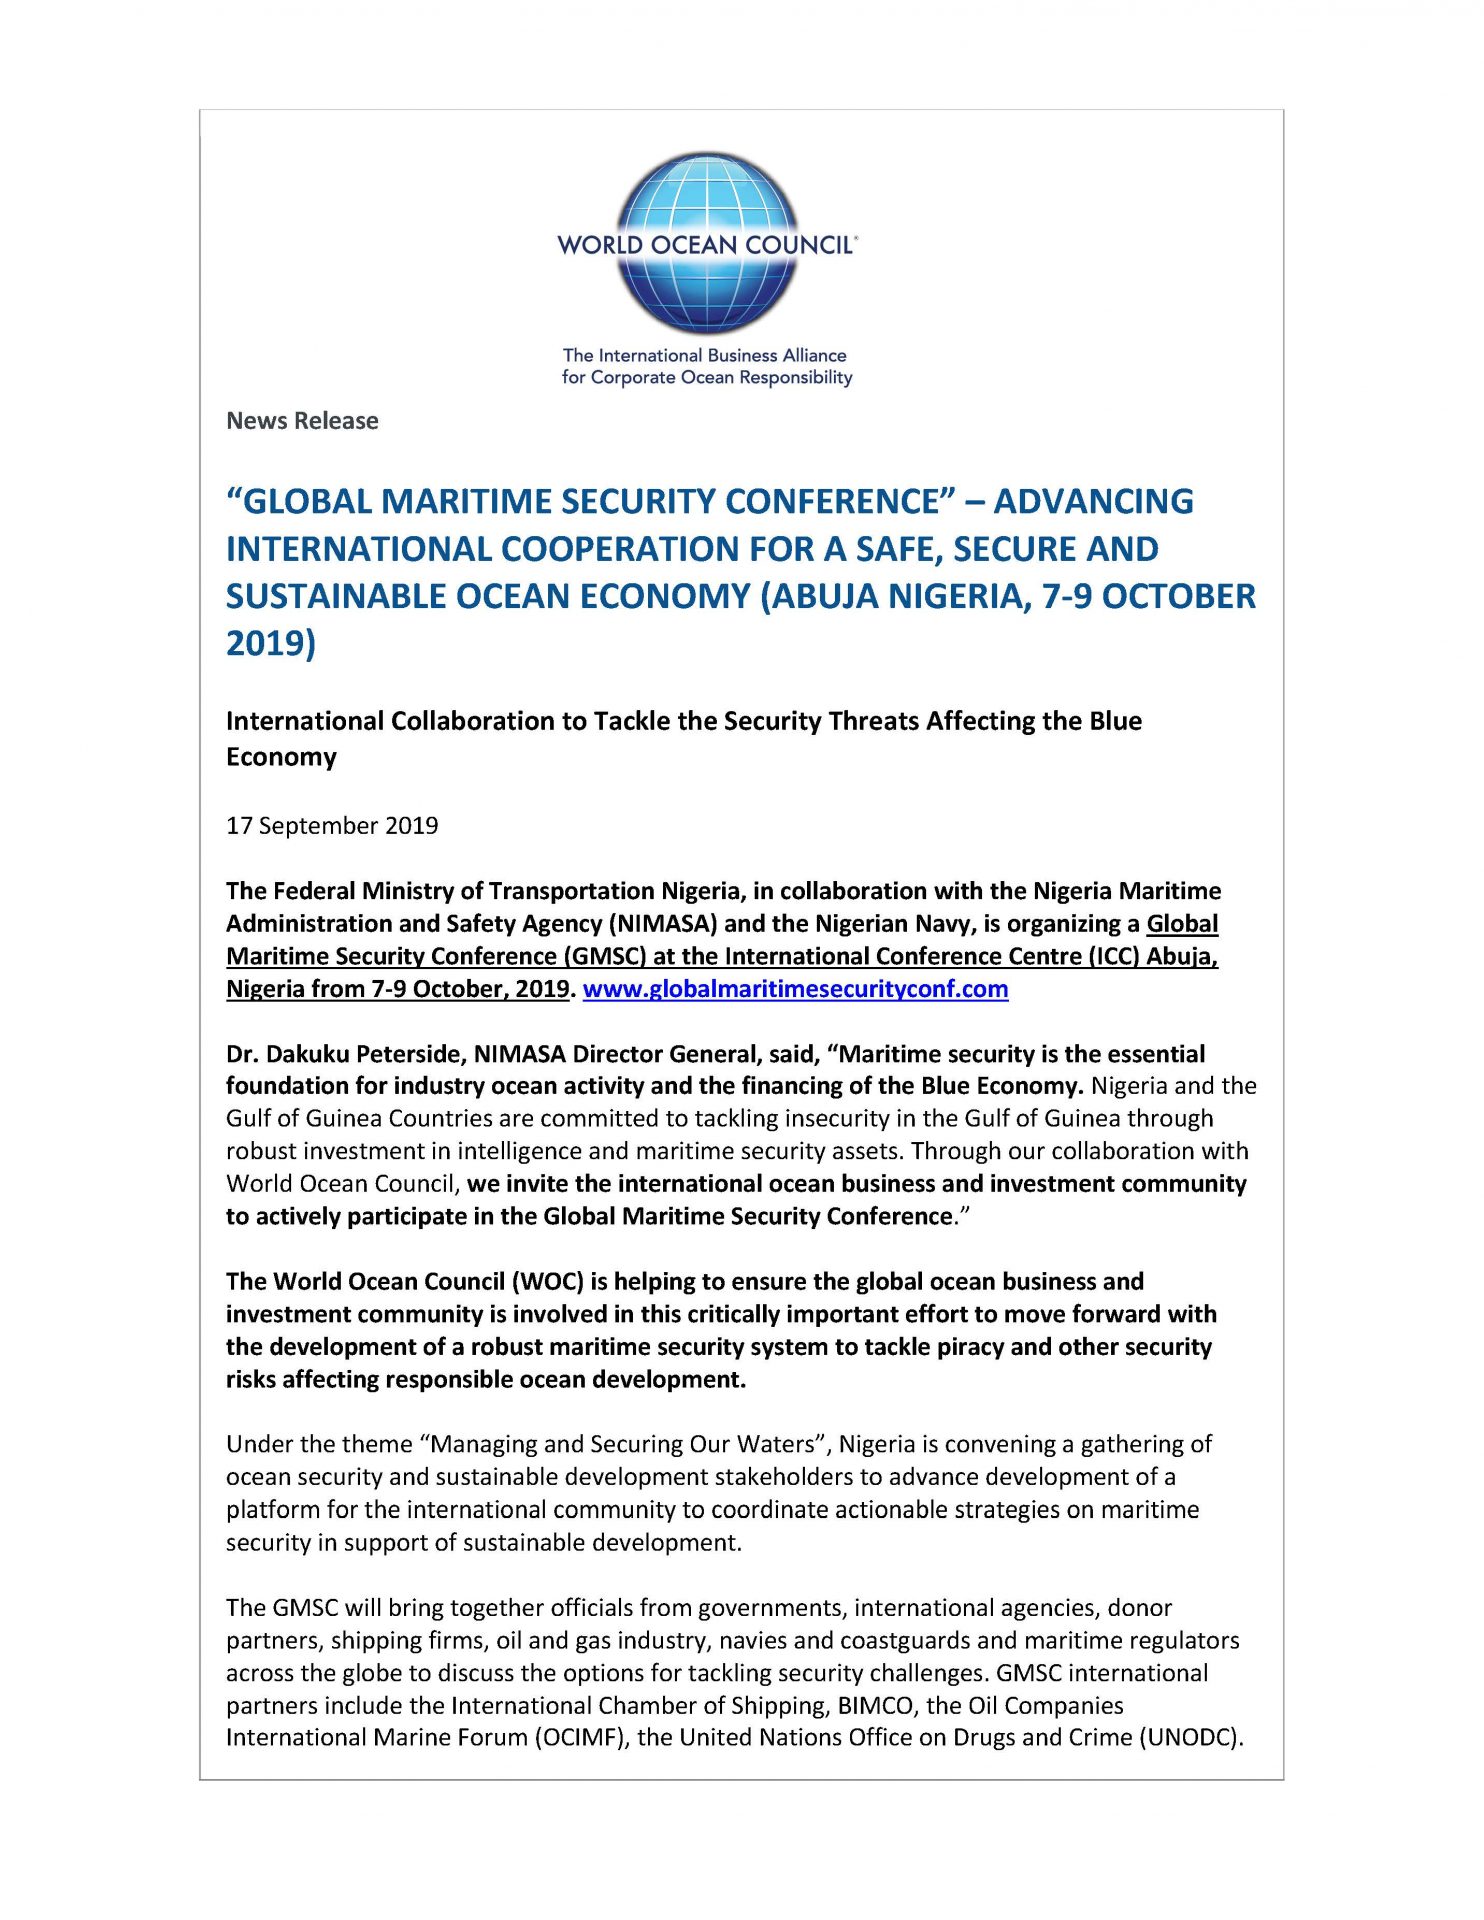 Global Maritime Security Conference (7-9 October) - 17 September 2019